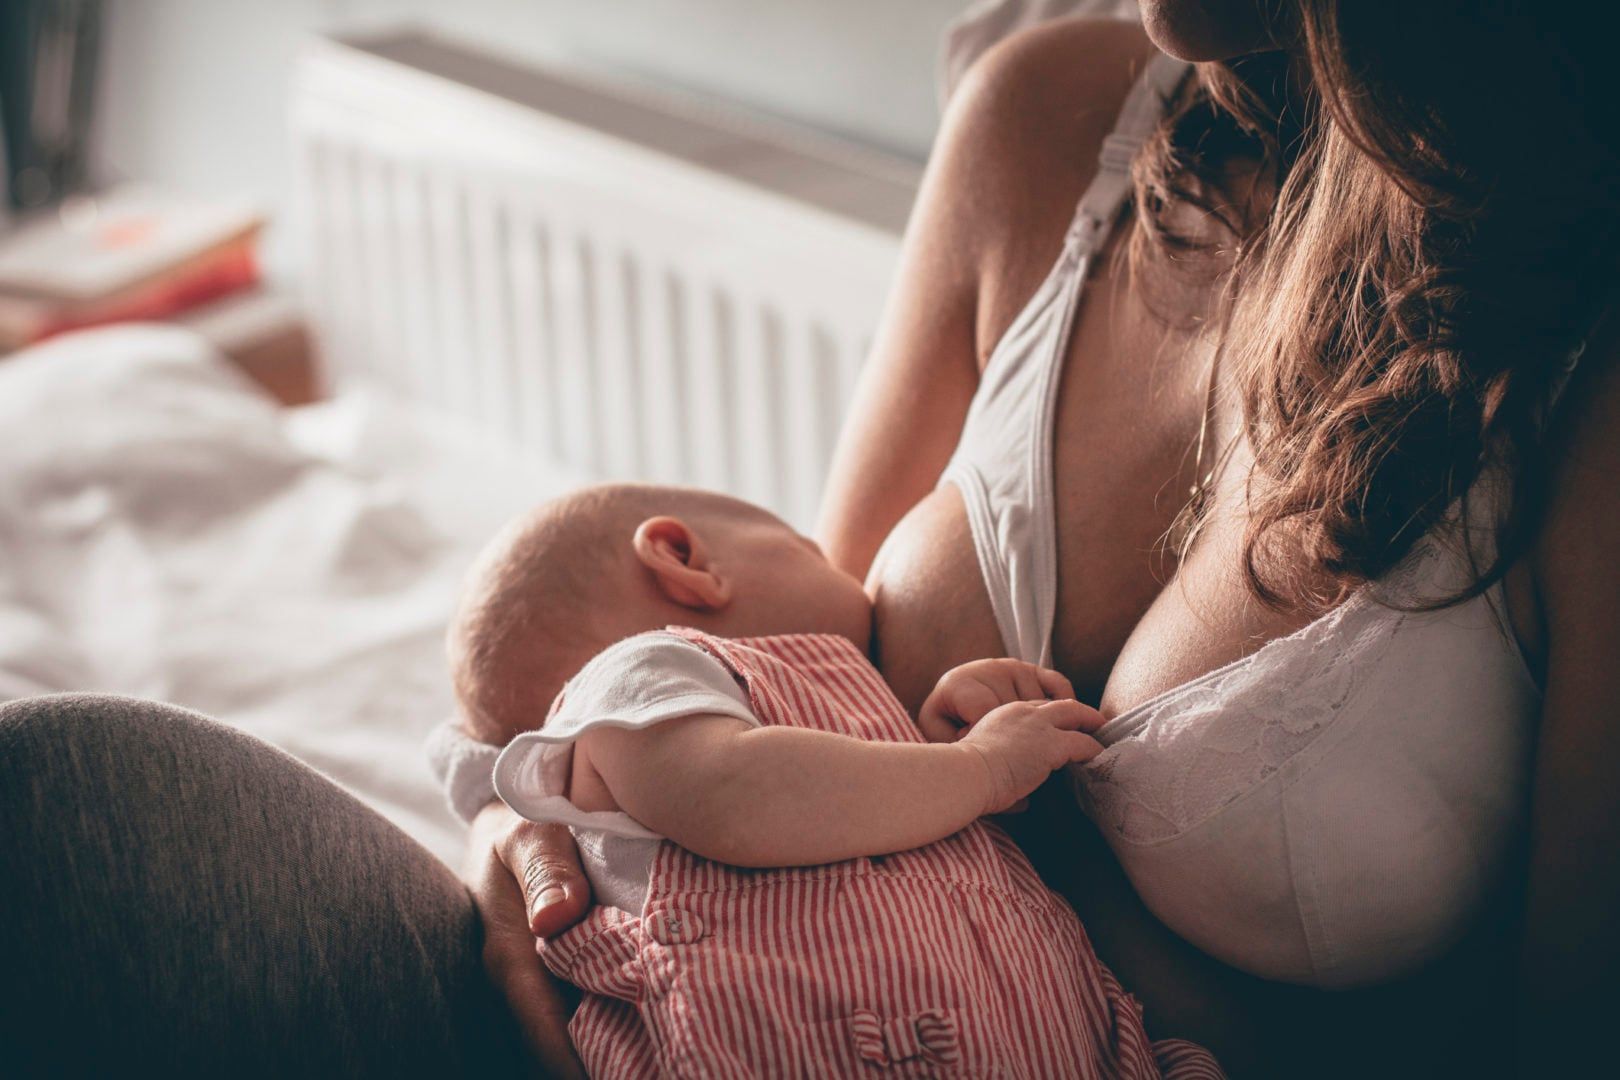 Breastfeeding With Nursing Bra